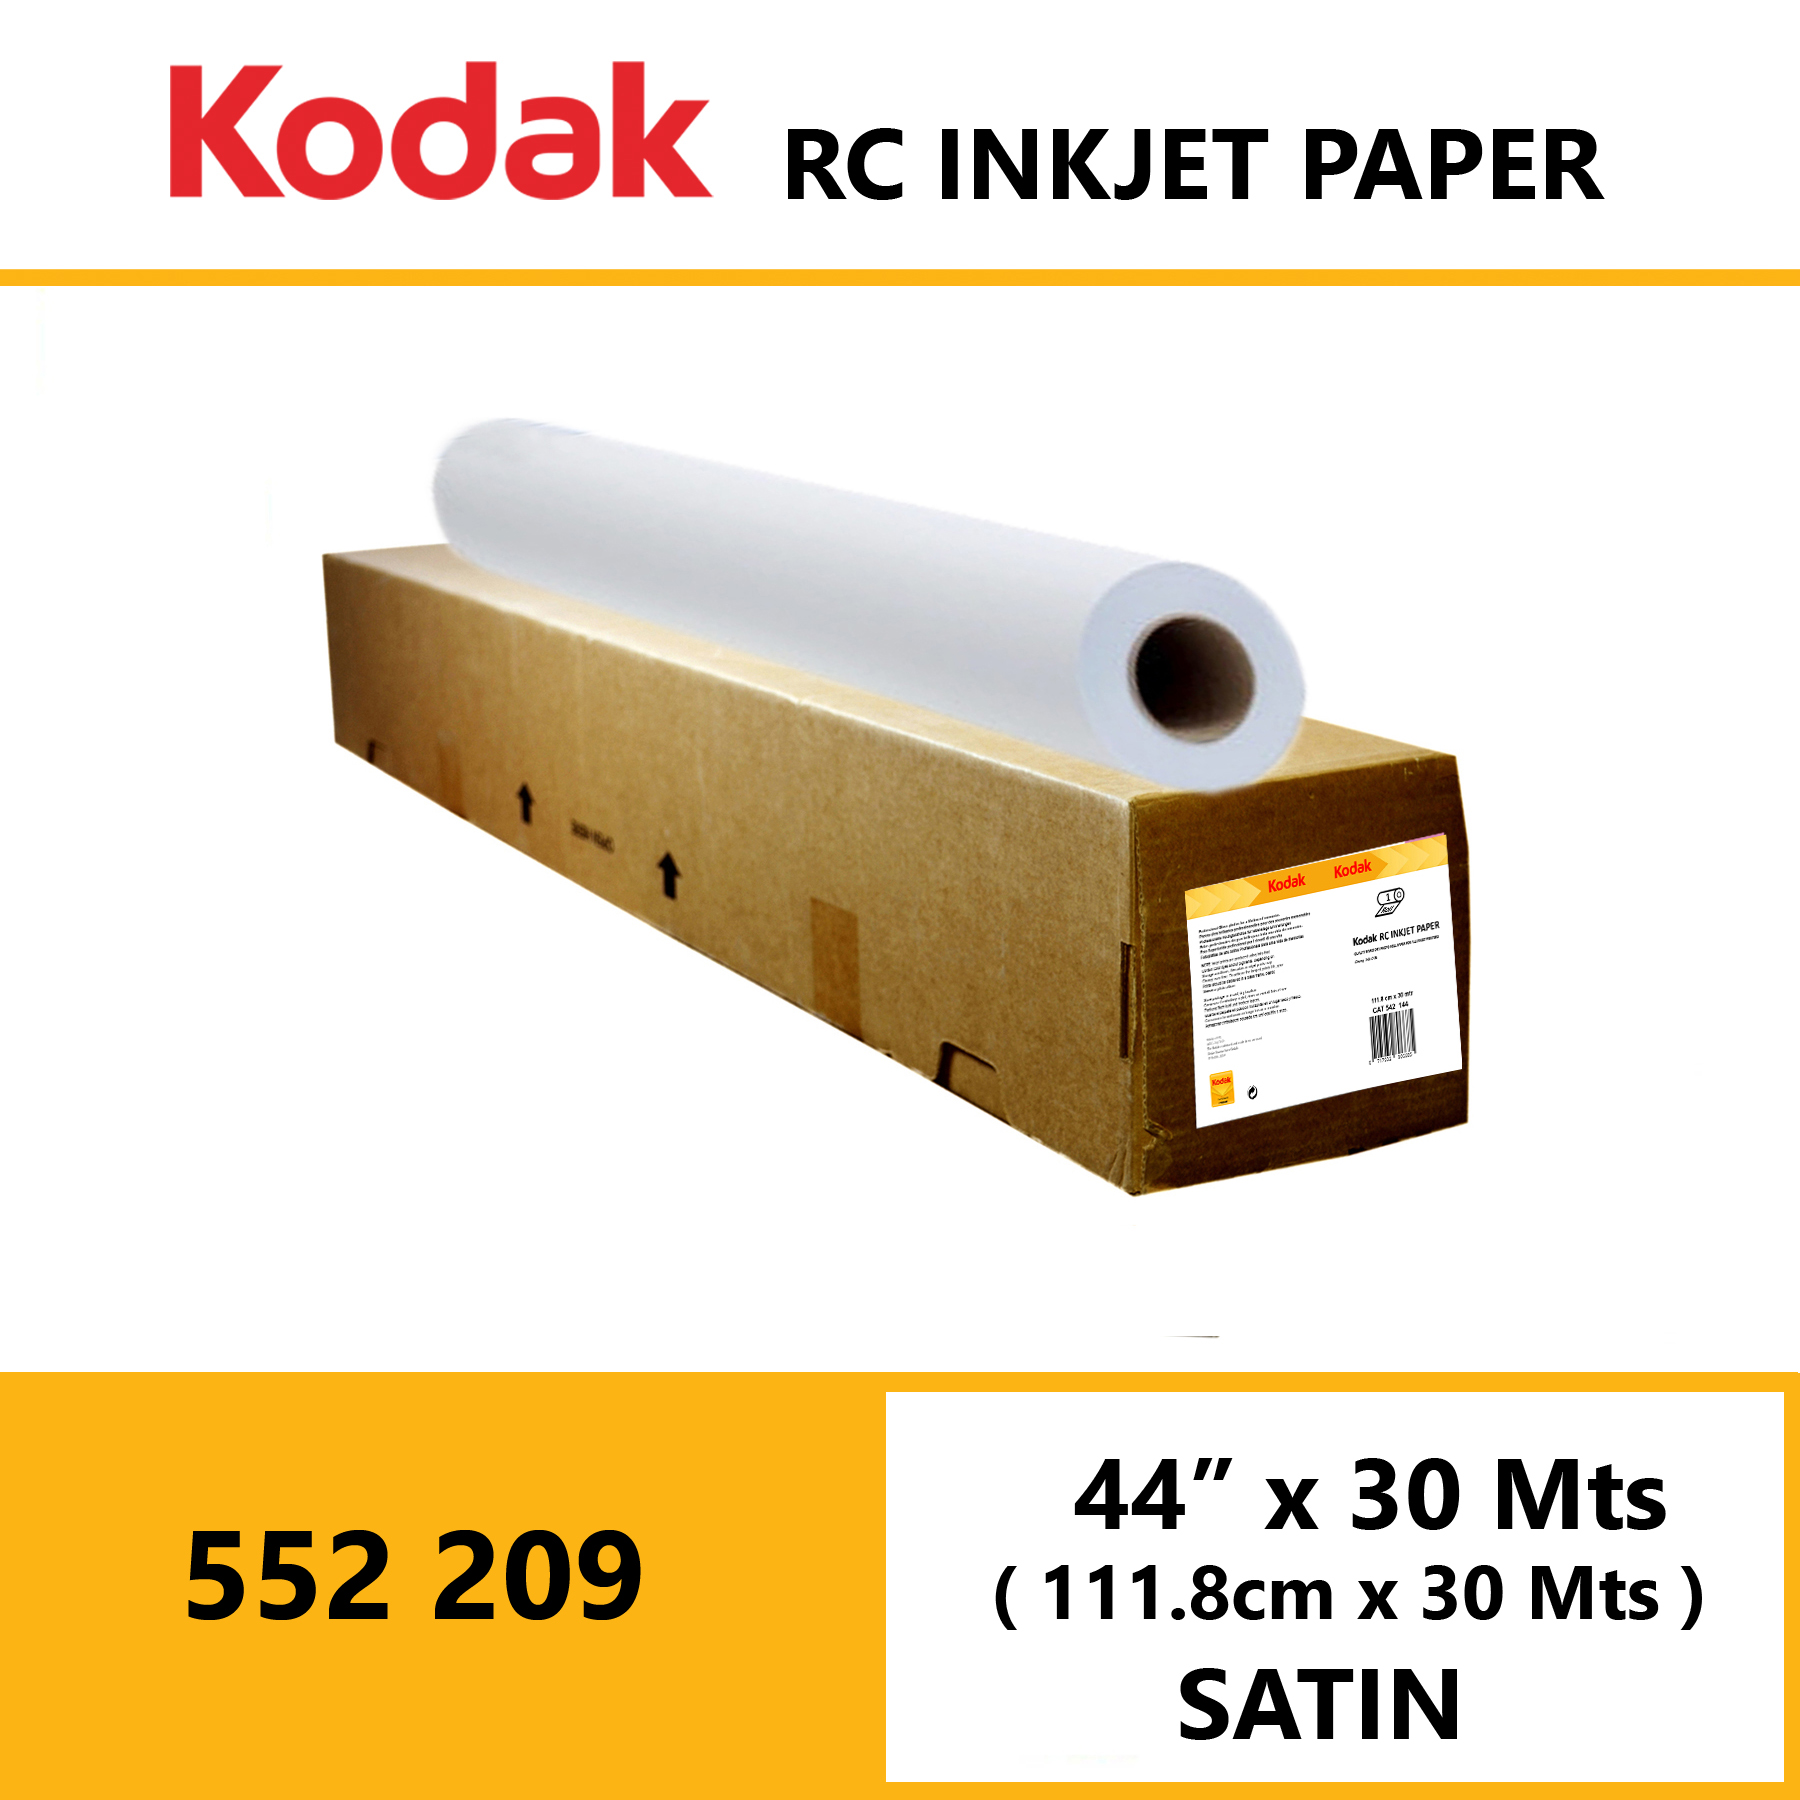 Kodak Inkjet RC Paper 44 ” x 30 Mtrs Satin